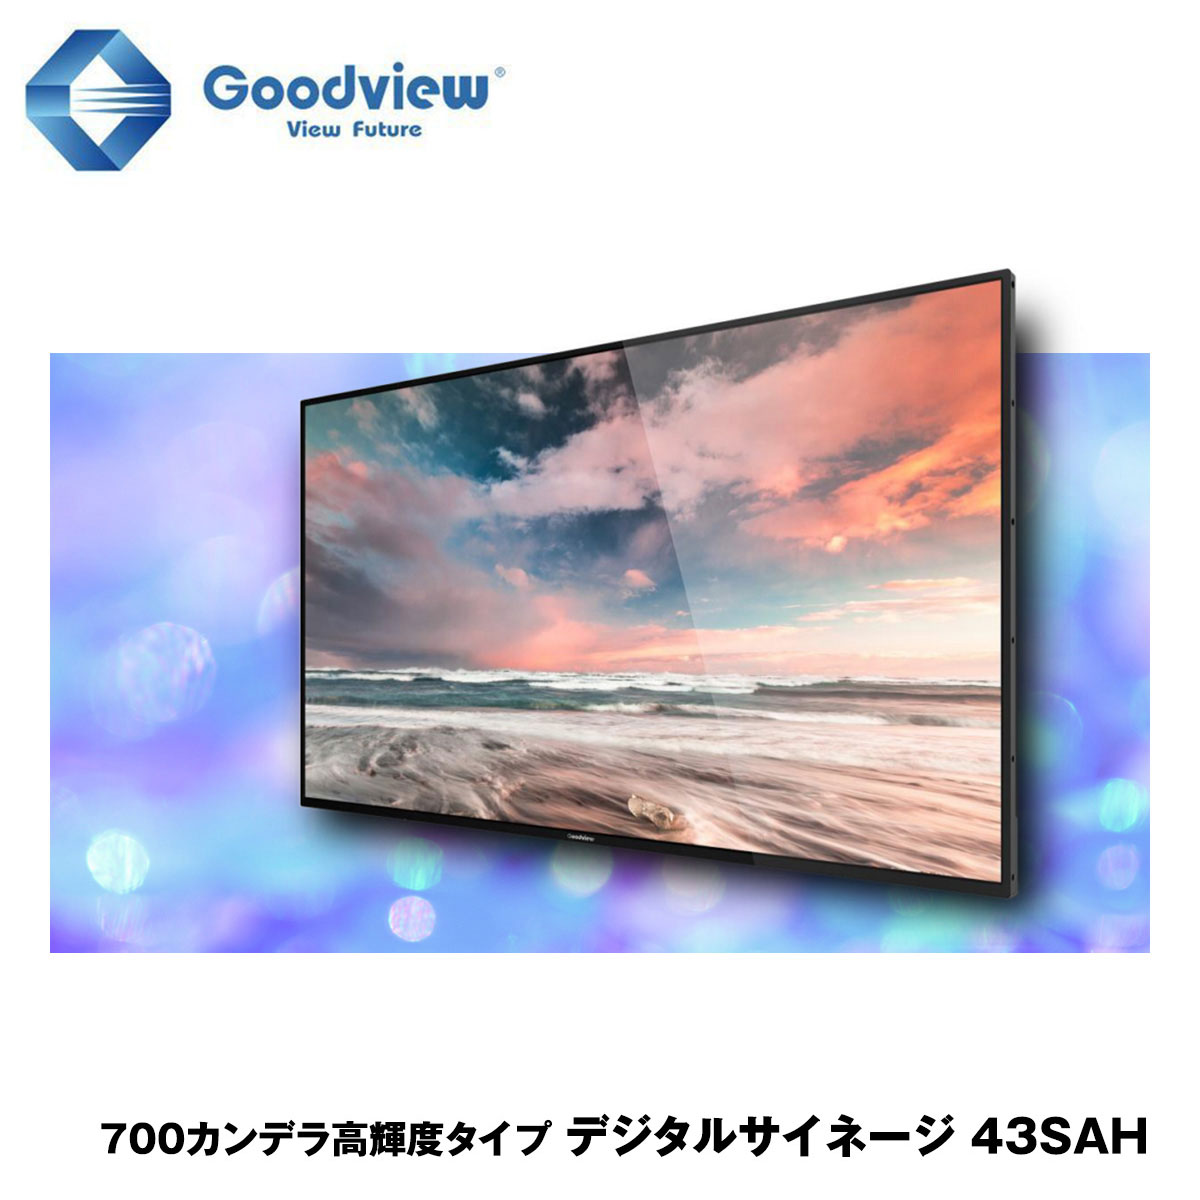 Goodview デジタルサイネージ 高輝度タイプ 700カンデラ 43型【43SAH】